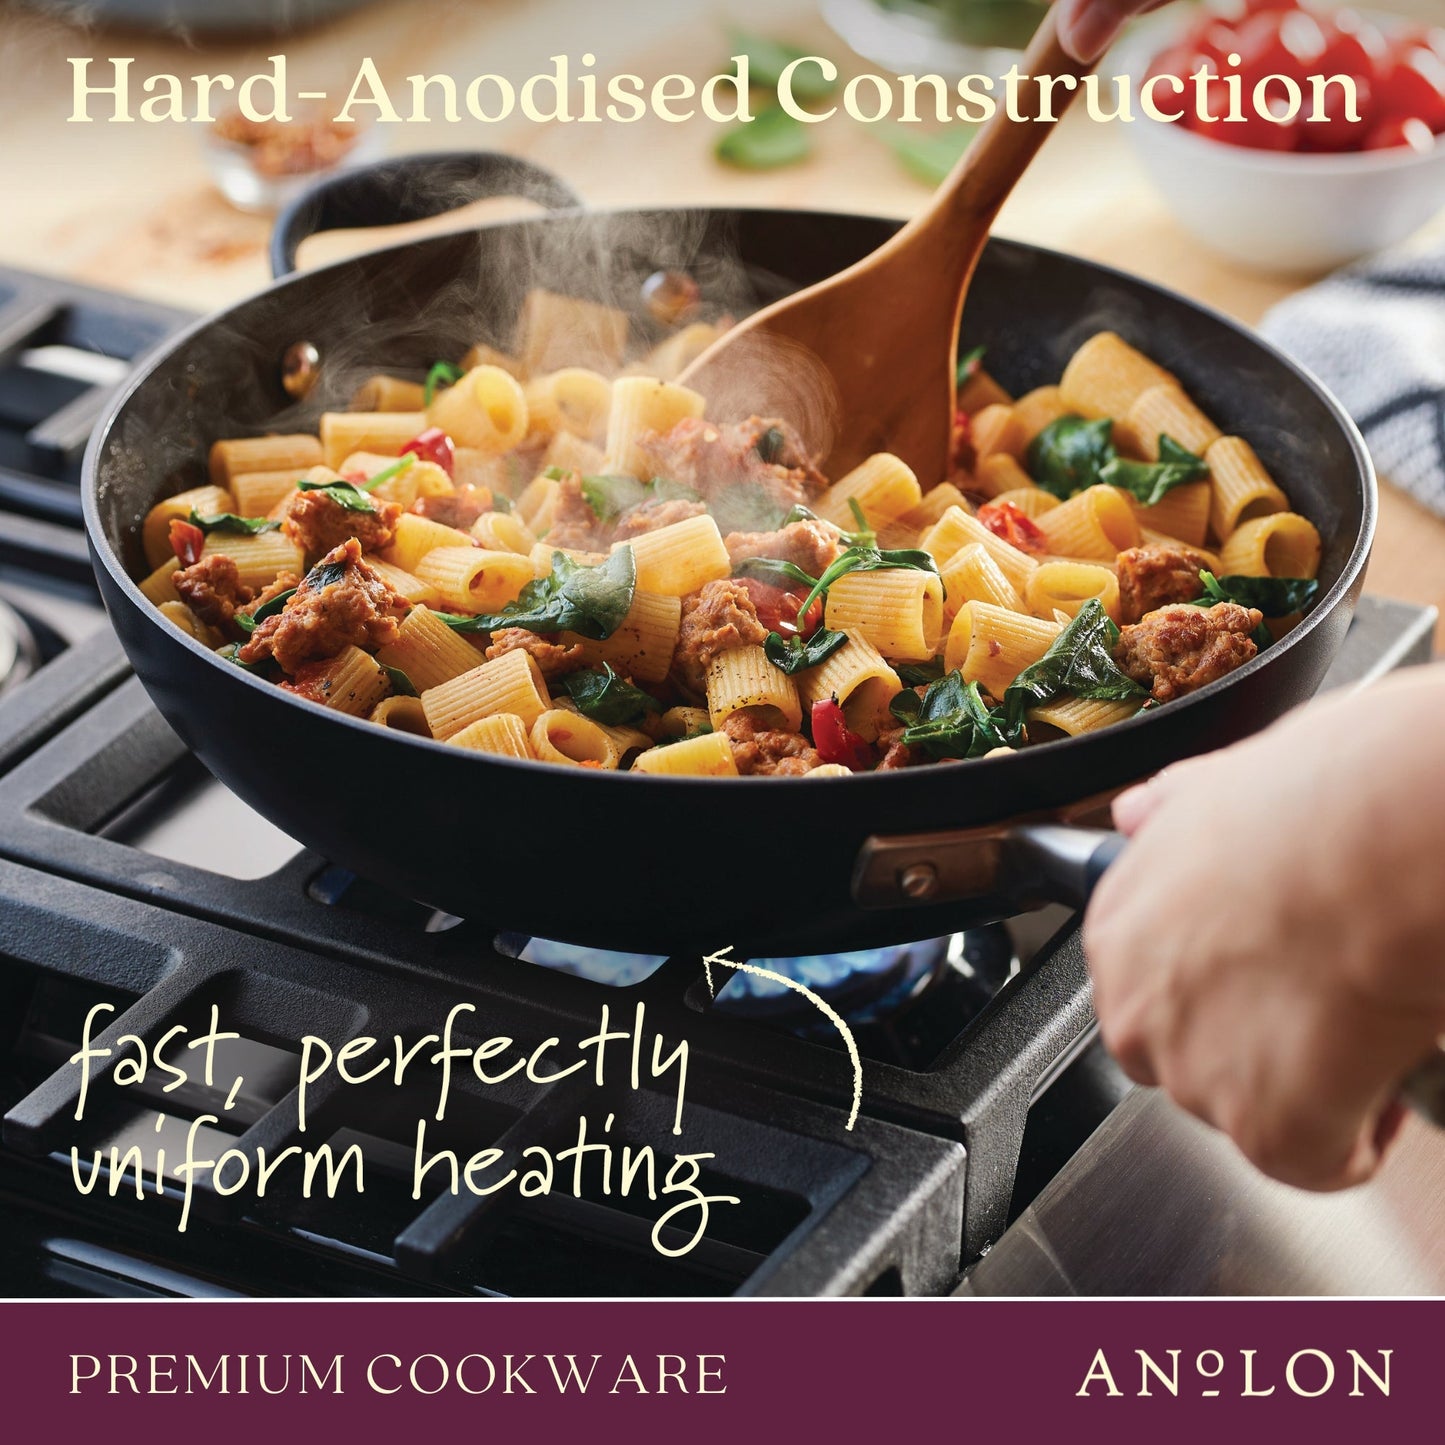 Anolon Advanced Home Nonstick 11 Piece Cookware Set Onyx